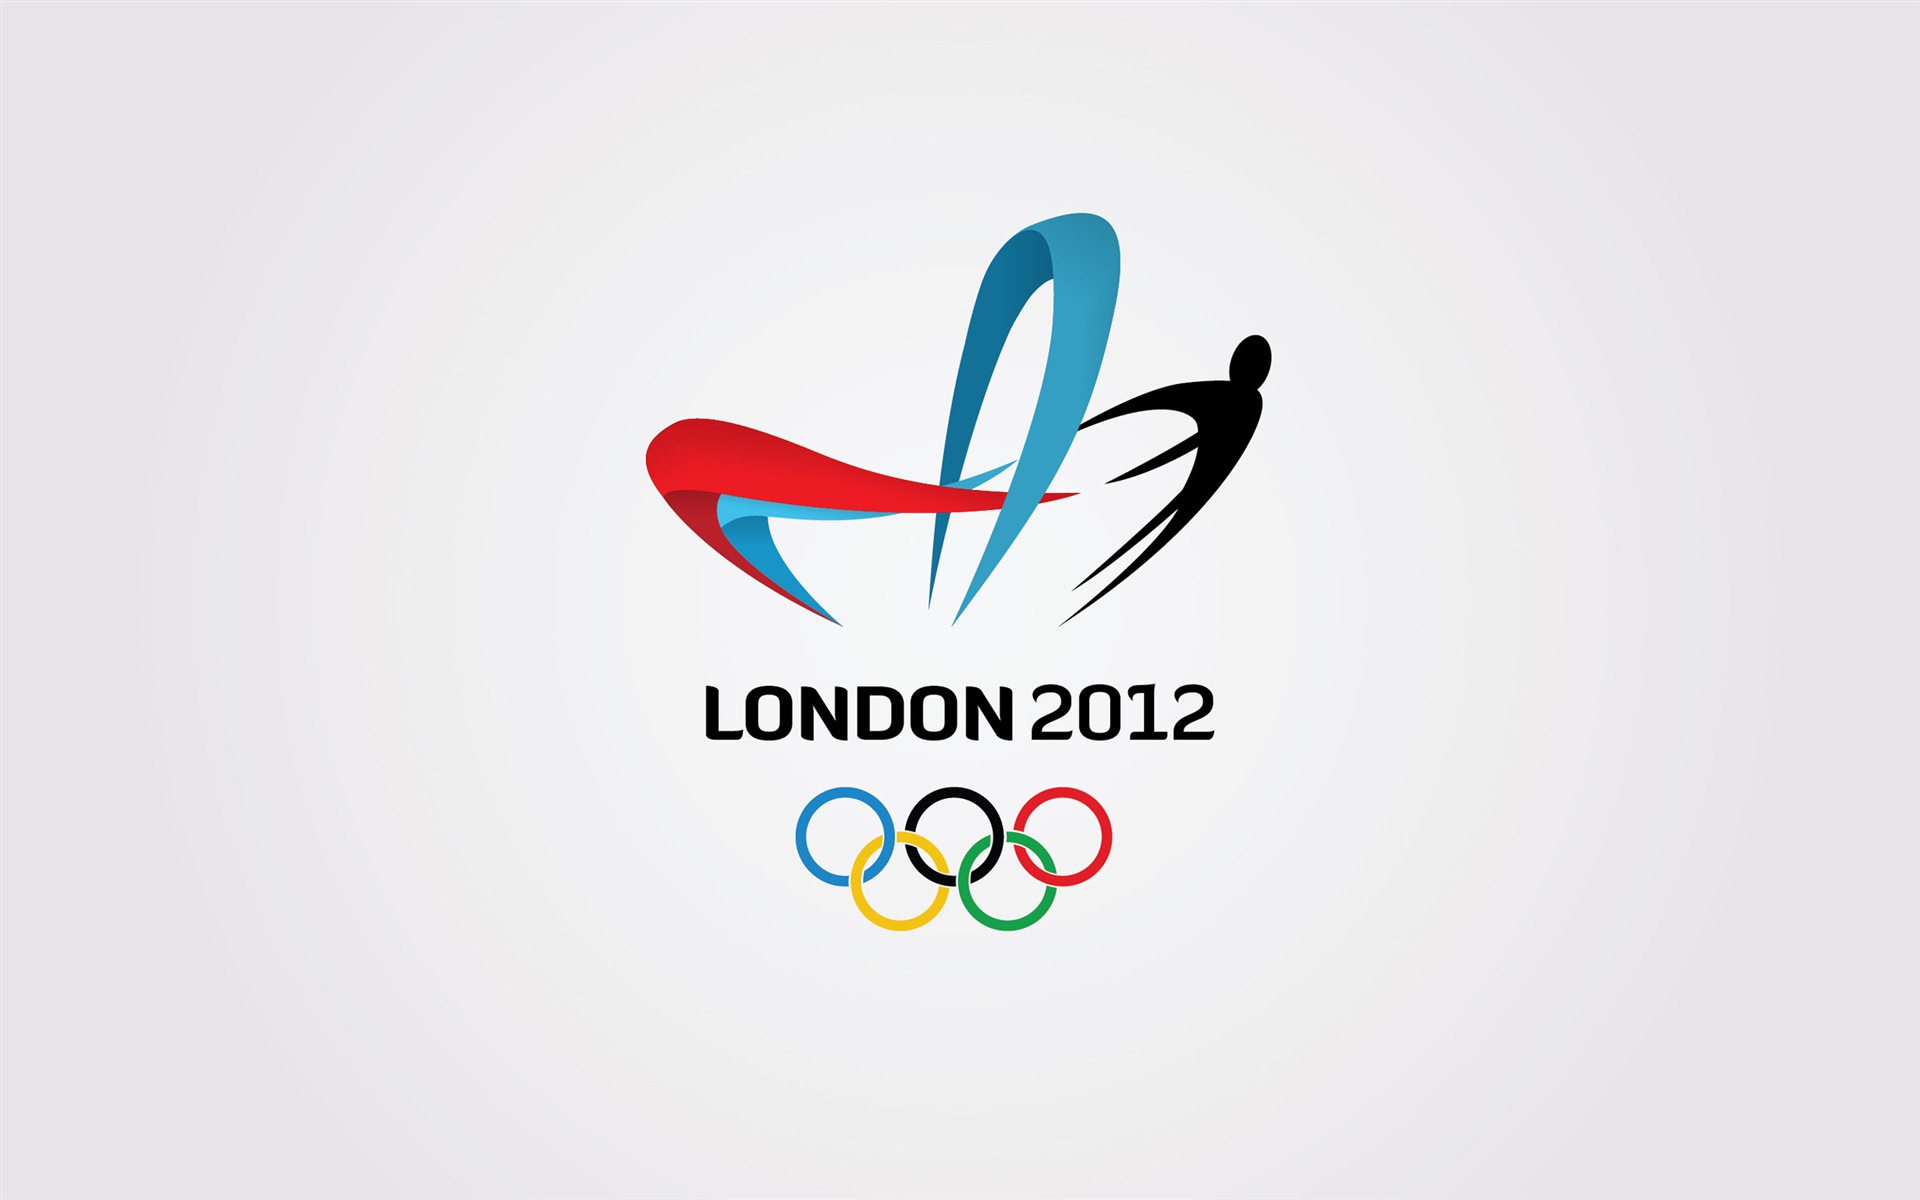 London 2012 Olympics theme wallpapers (2) #25 - 1920x1200